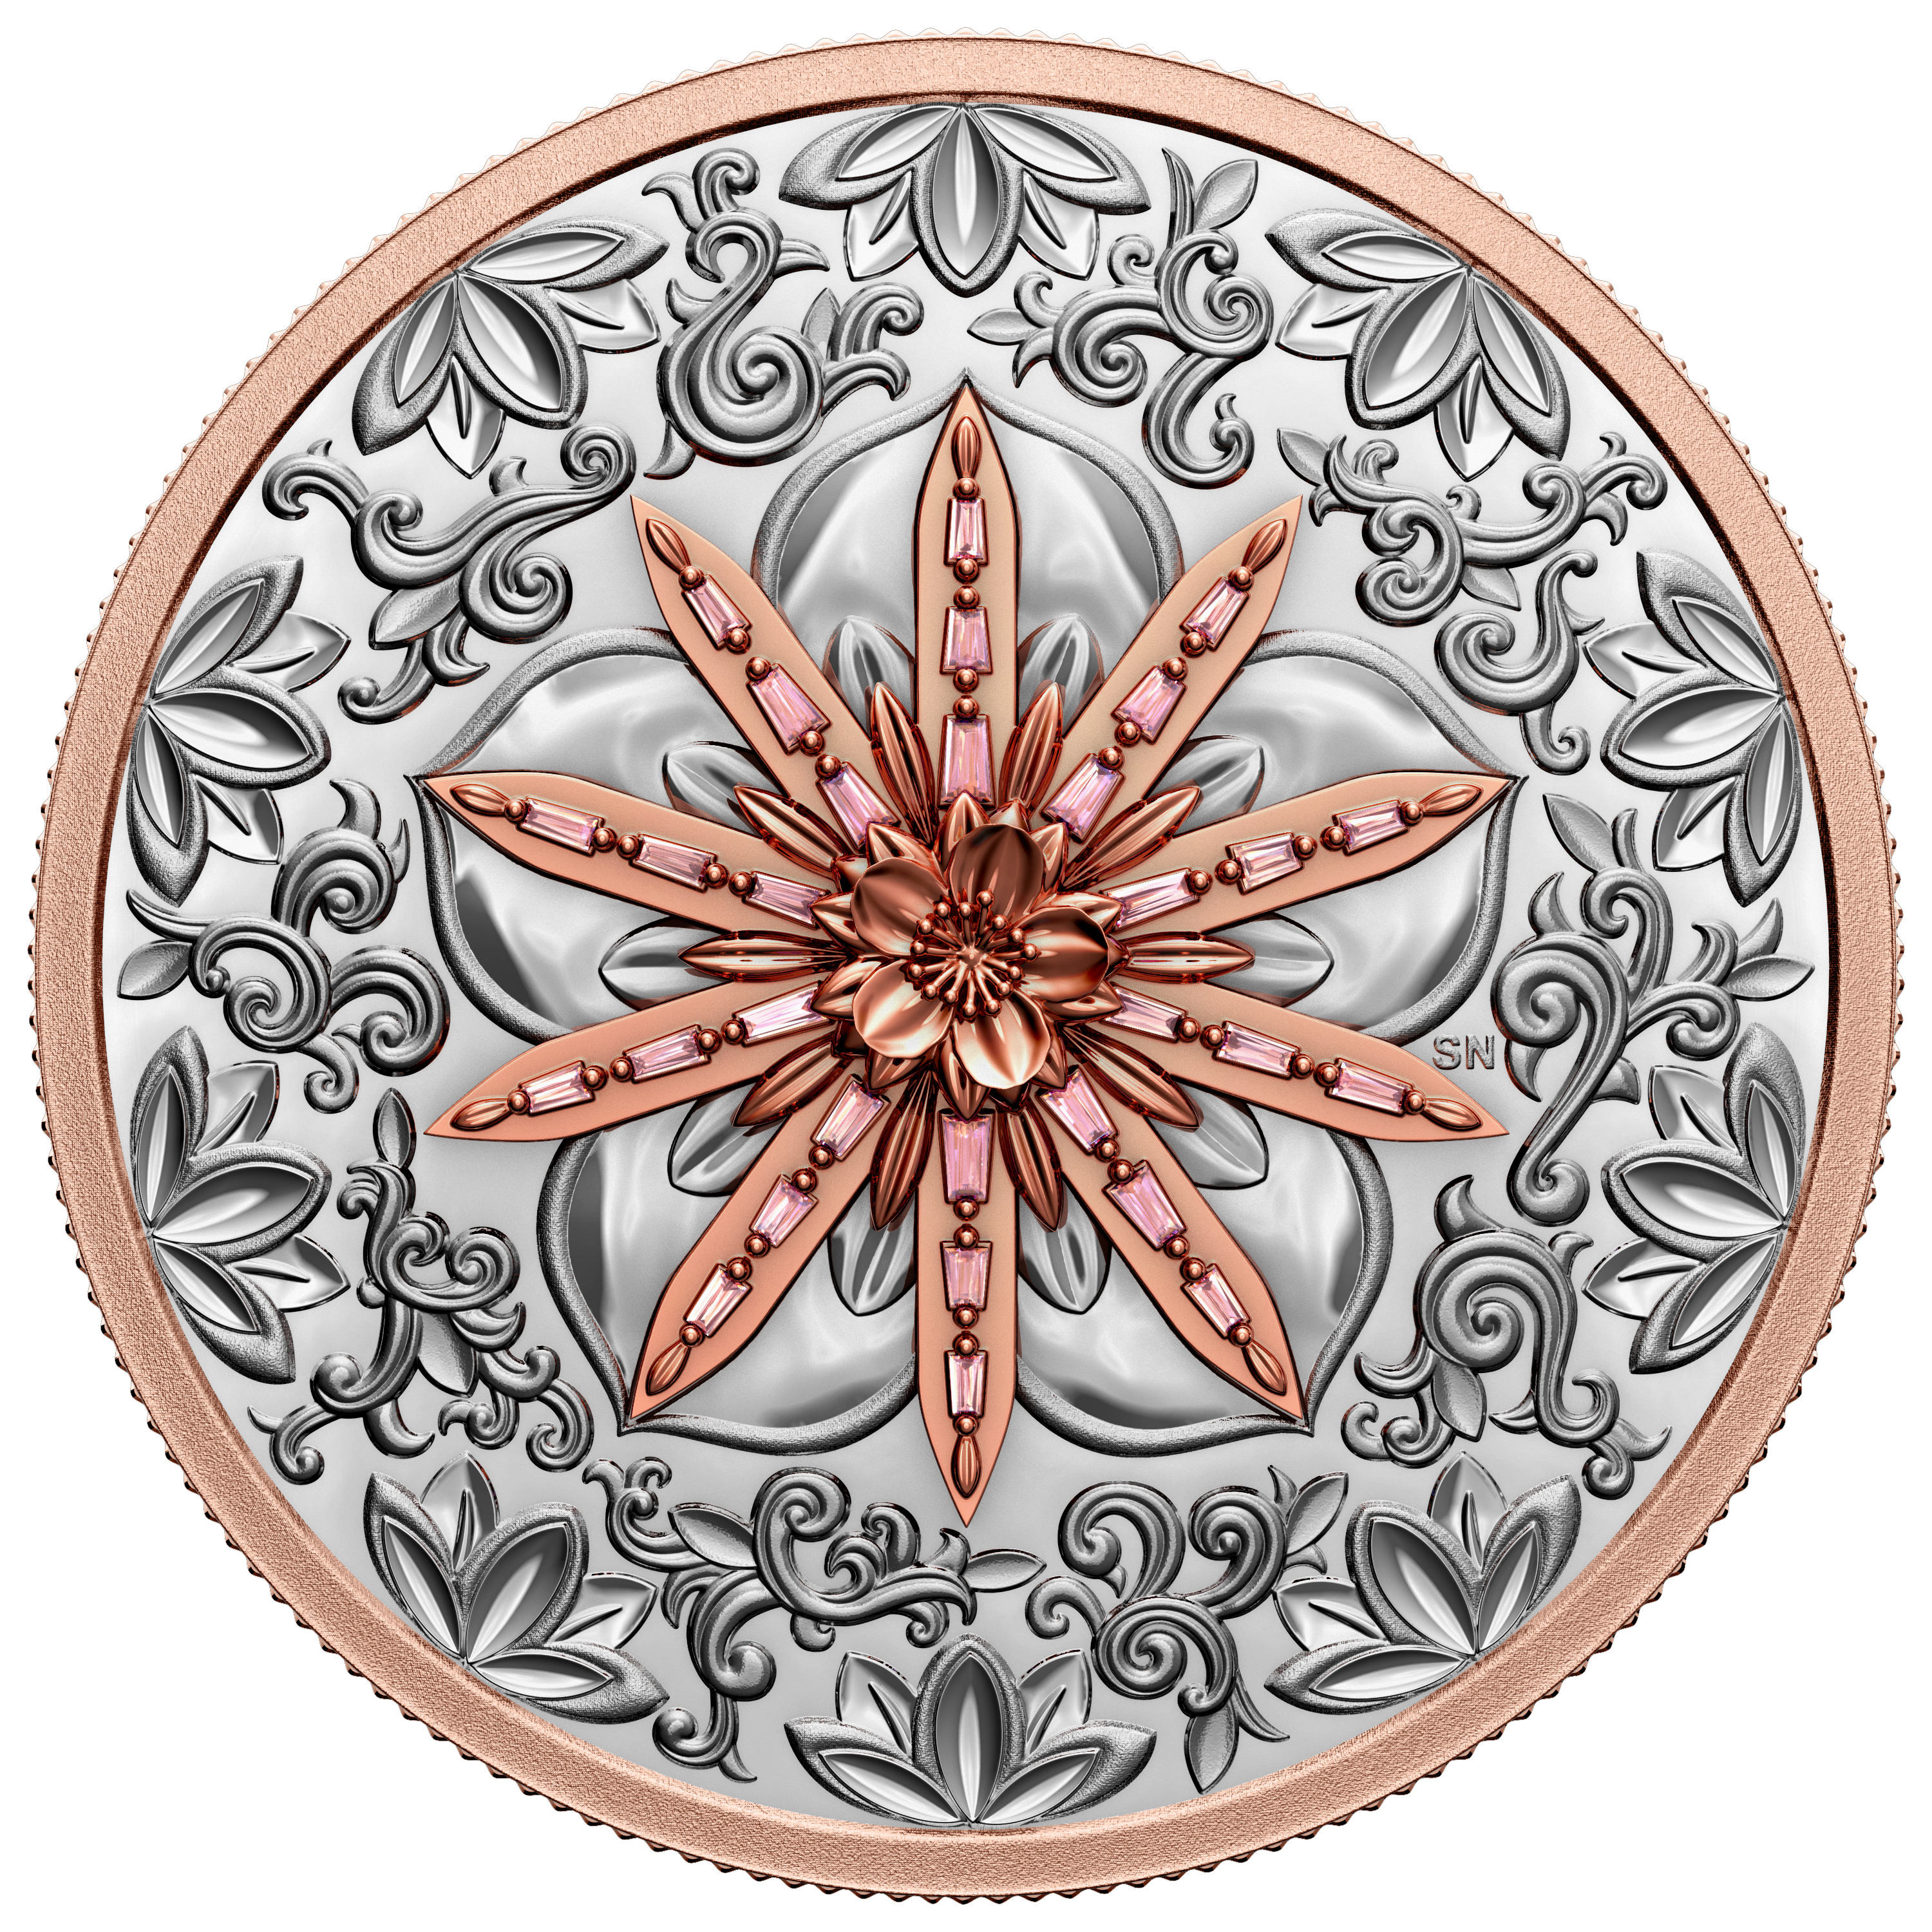 OPULENCE Grandeur 2 Oz Pure Gold Pink Diamond Coin $350 Canada